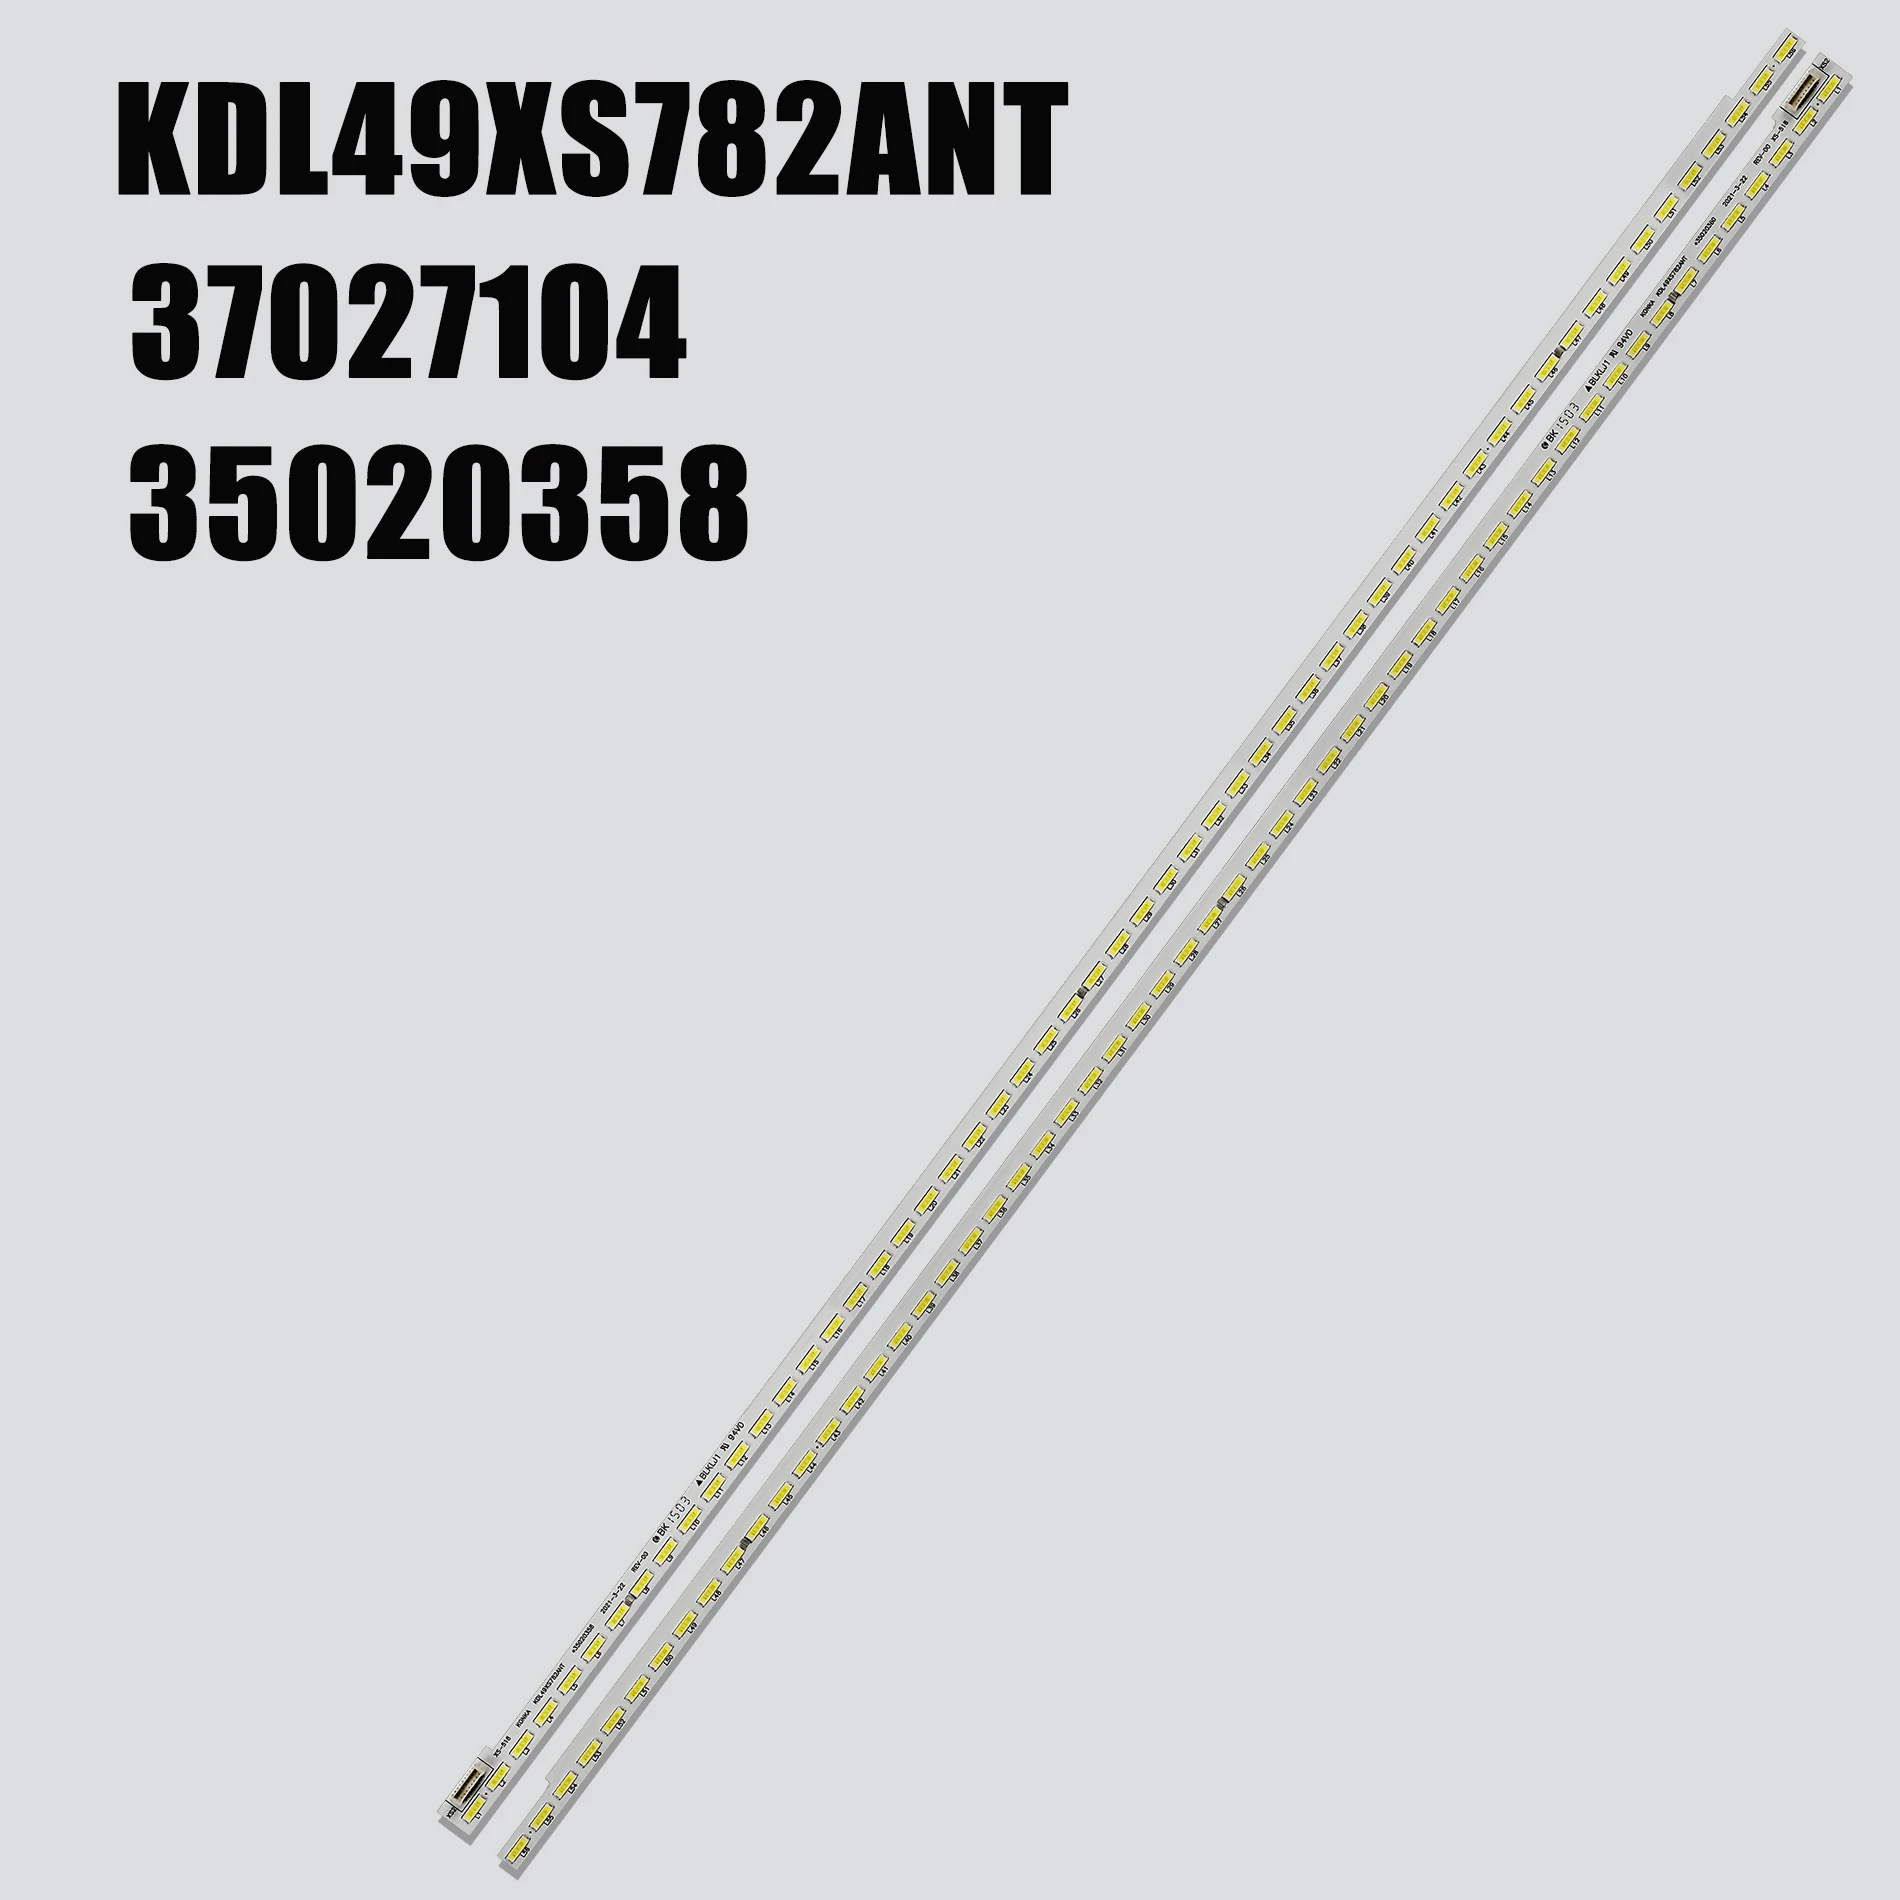 

LED Backlight strip 56 lamp for Konka KDL49XS782ANT DY 37027104 35020358 35020360 LED50R66 LED50X8800U LED49R6610U LED50X9800PU